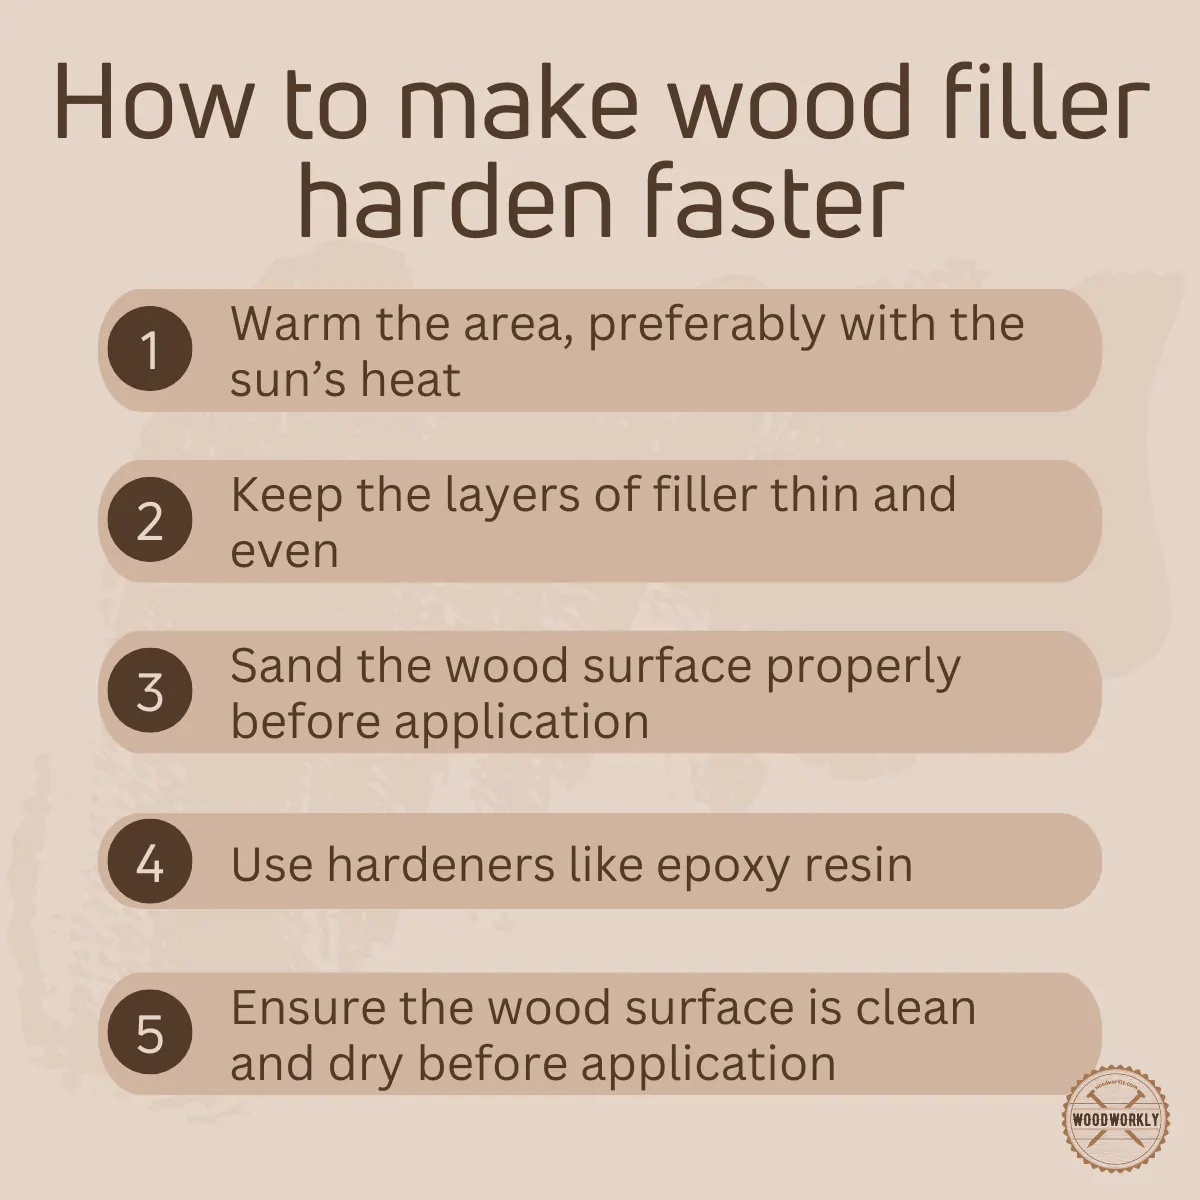 How to make wood filler harden faster